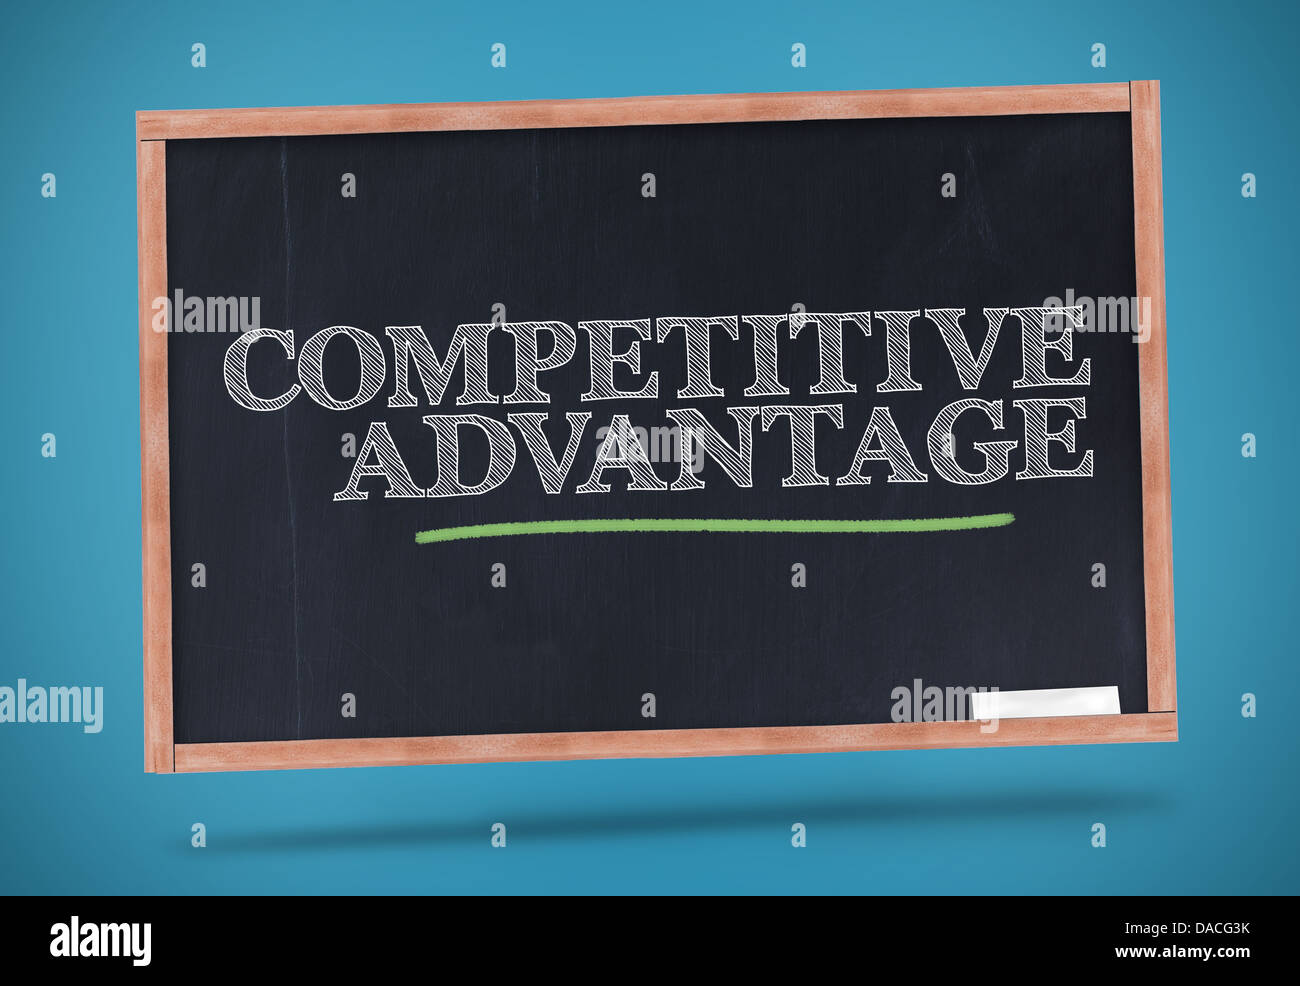 Competitive advantage written on a chalkboard Stock Photo